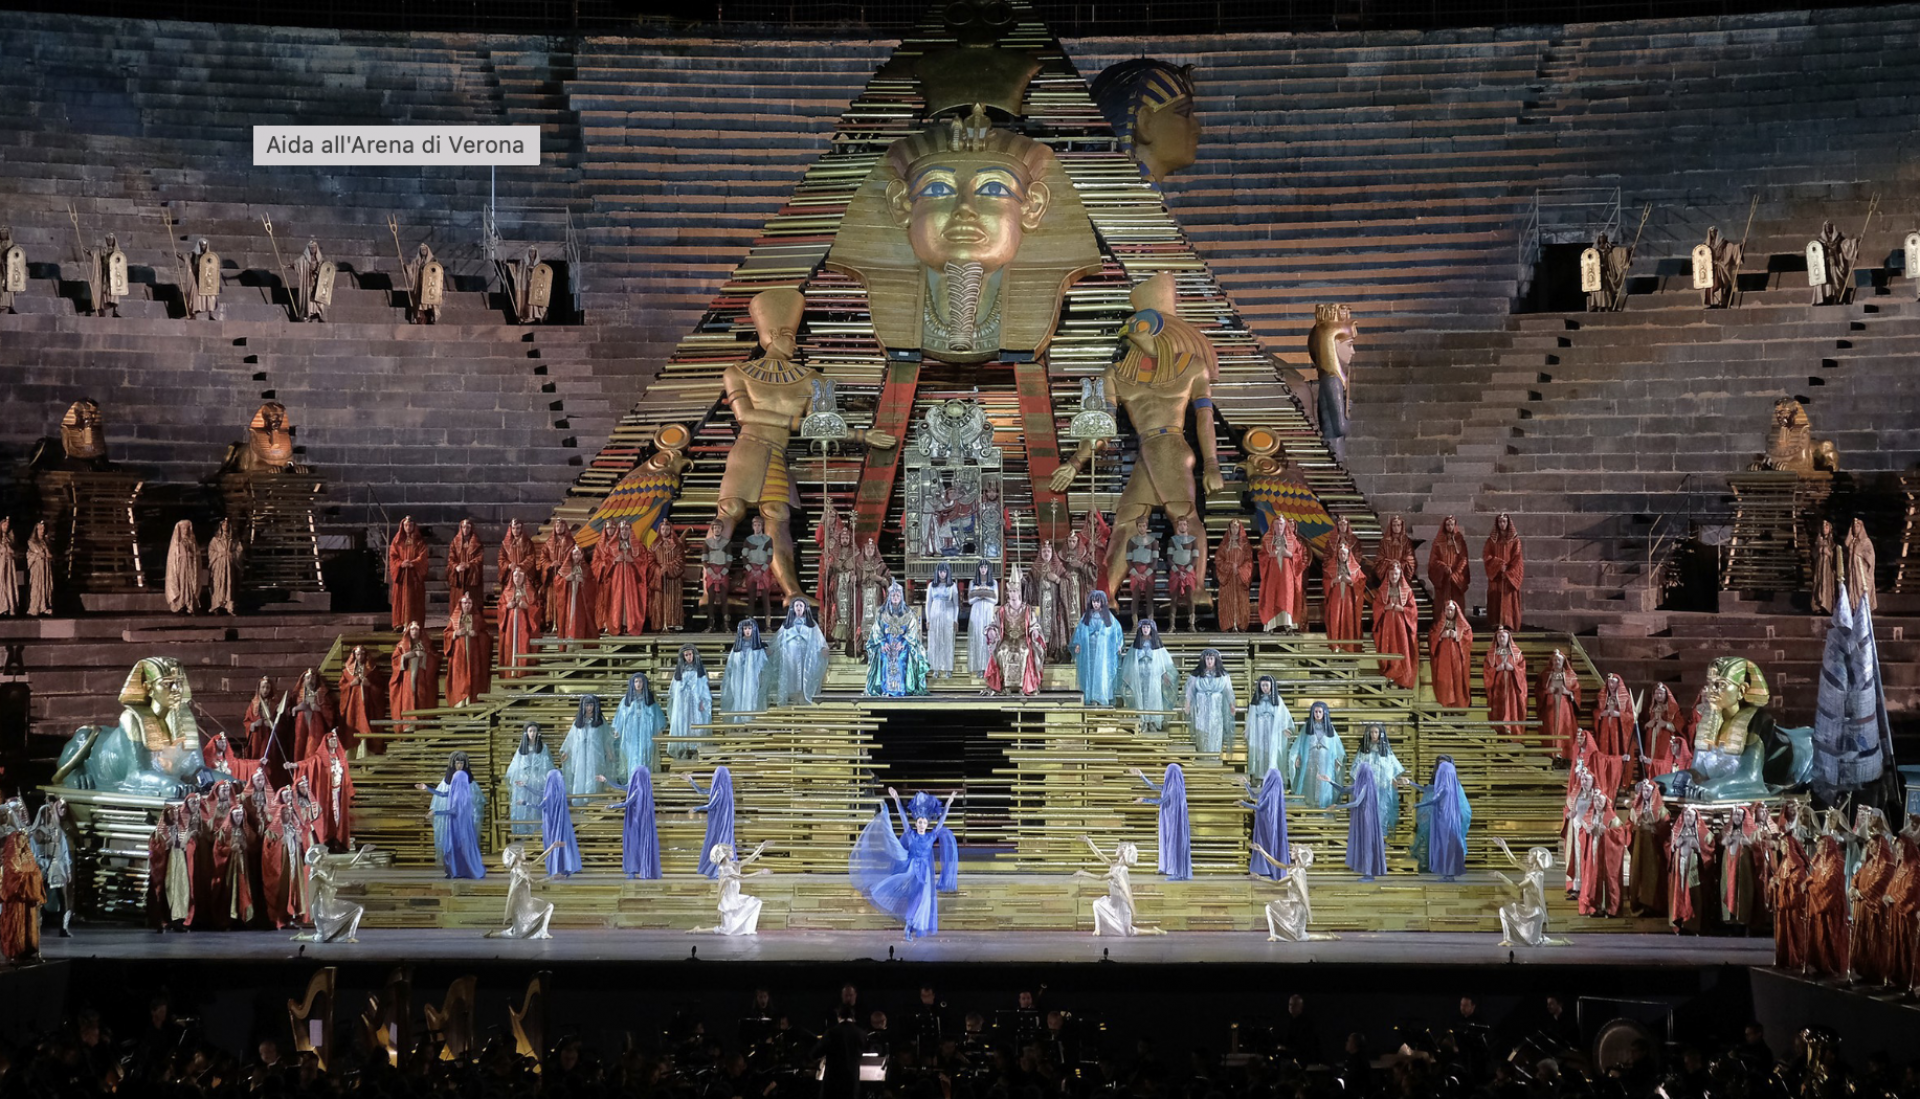 Aida Verona Arena